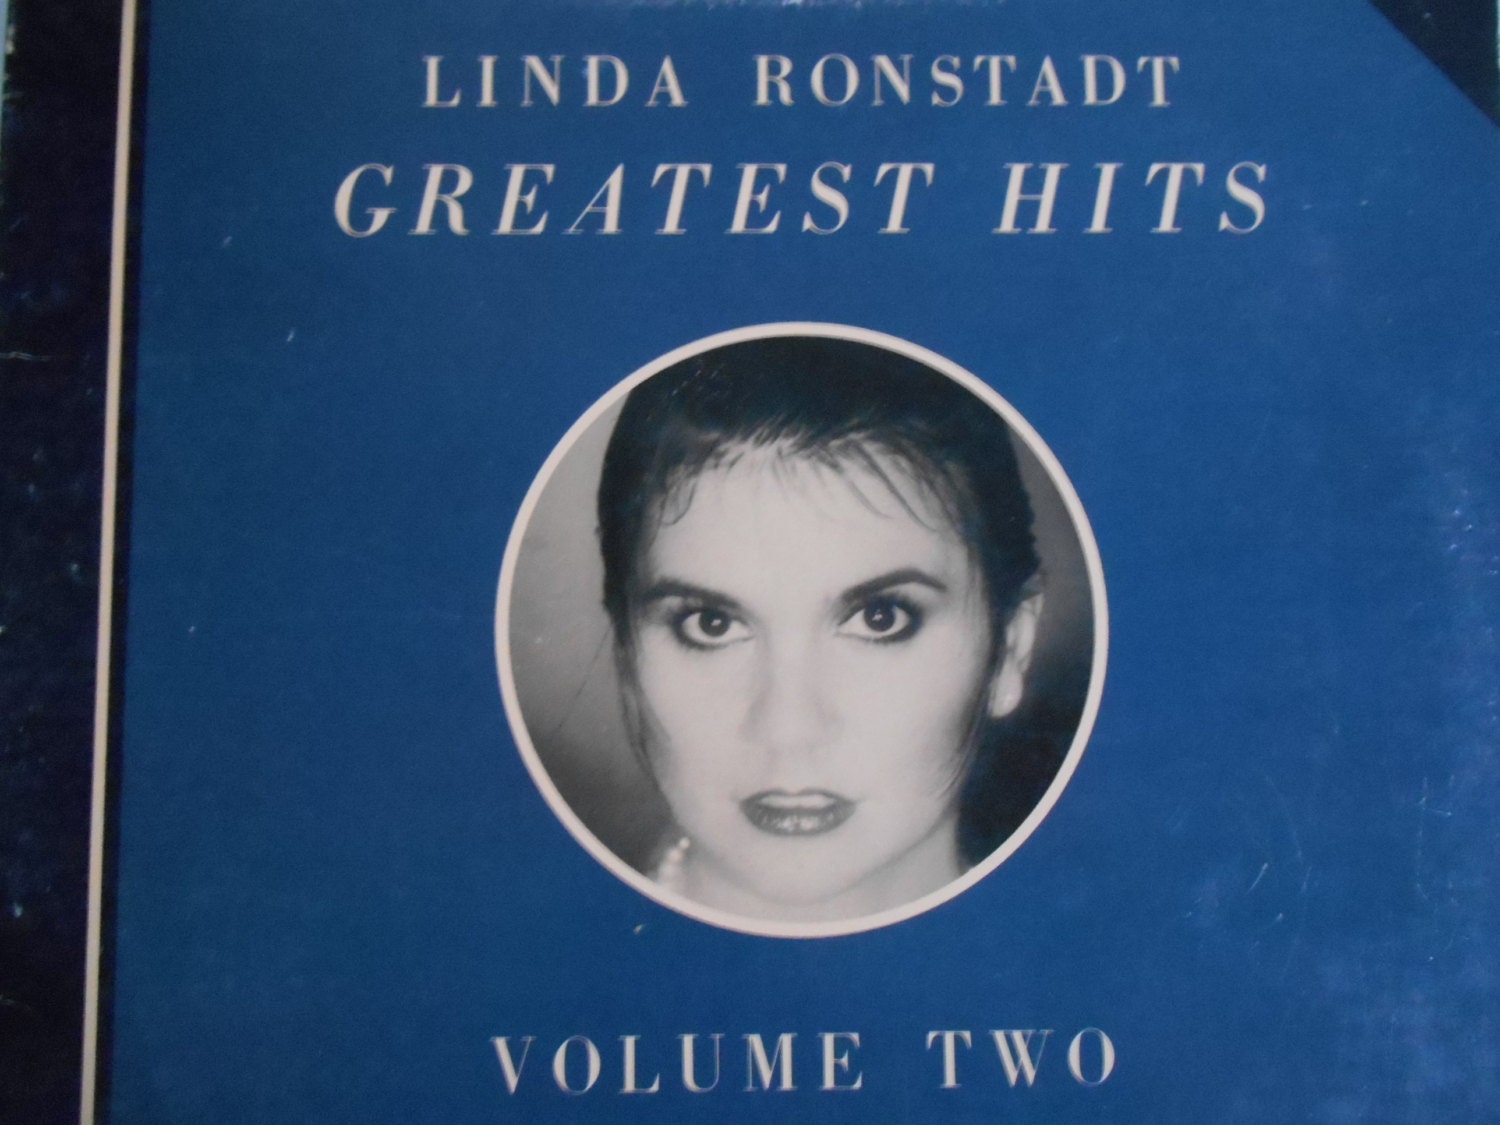 Linda Ronstadt Greatest Hits Volume Two-vinyl record